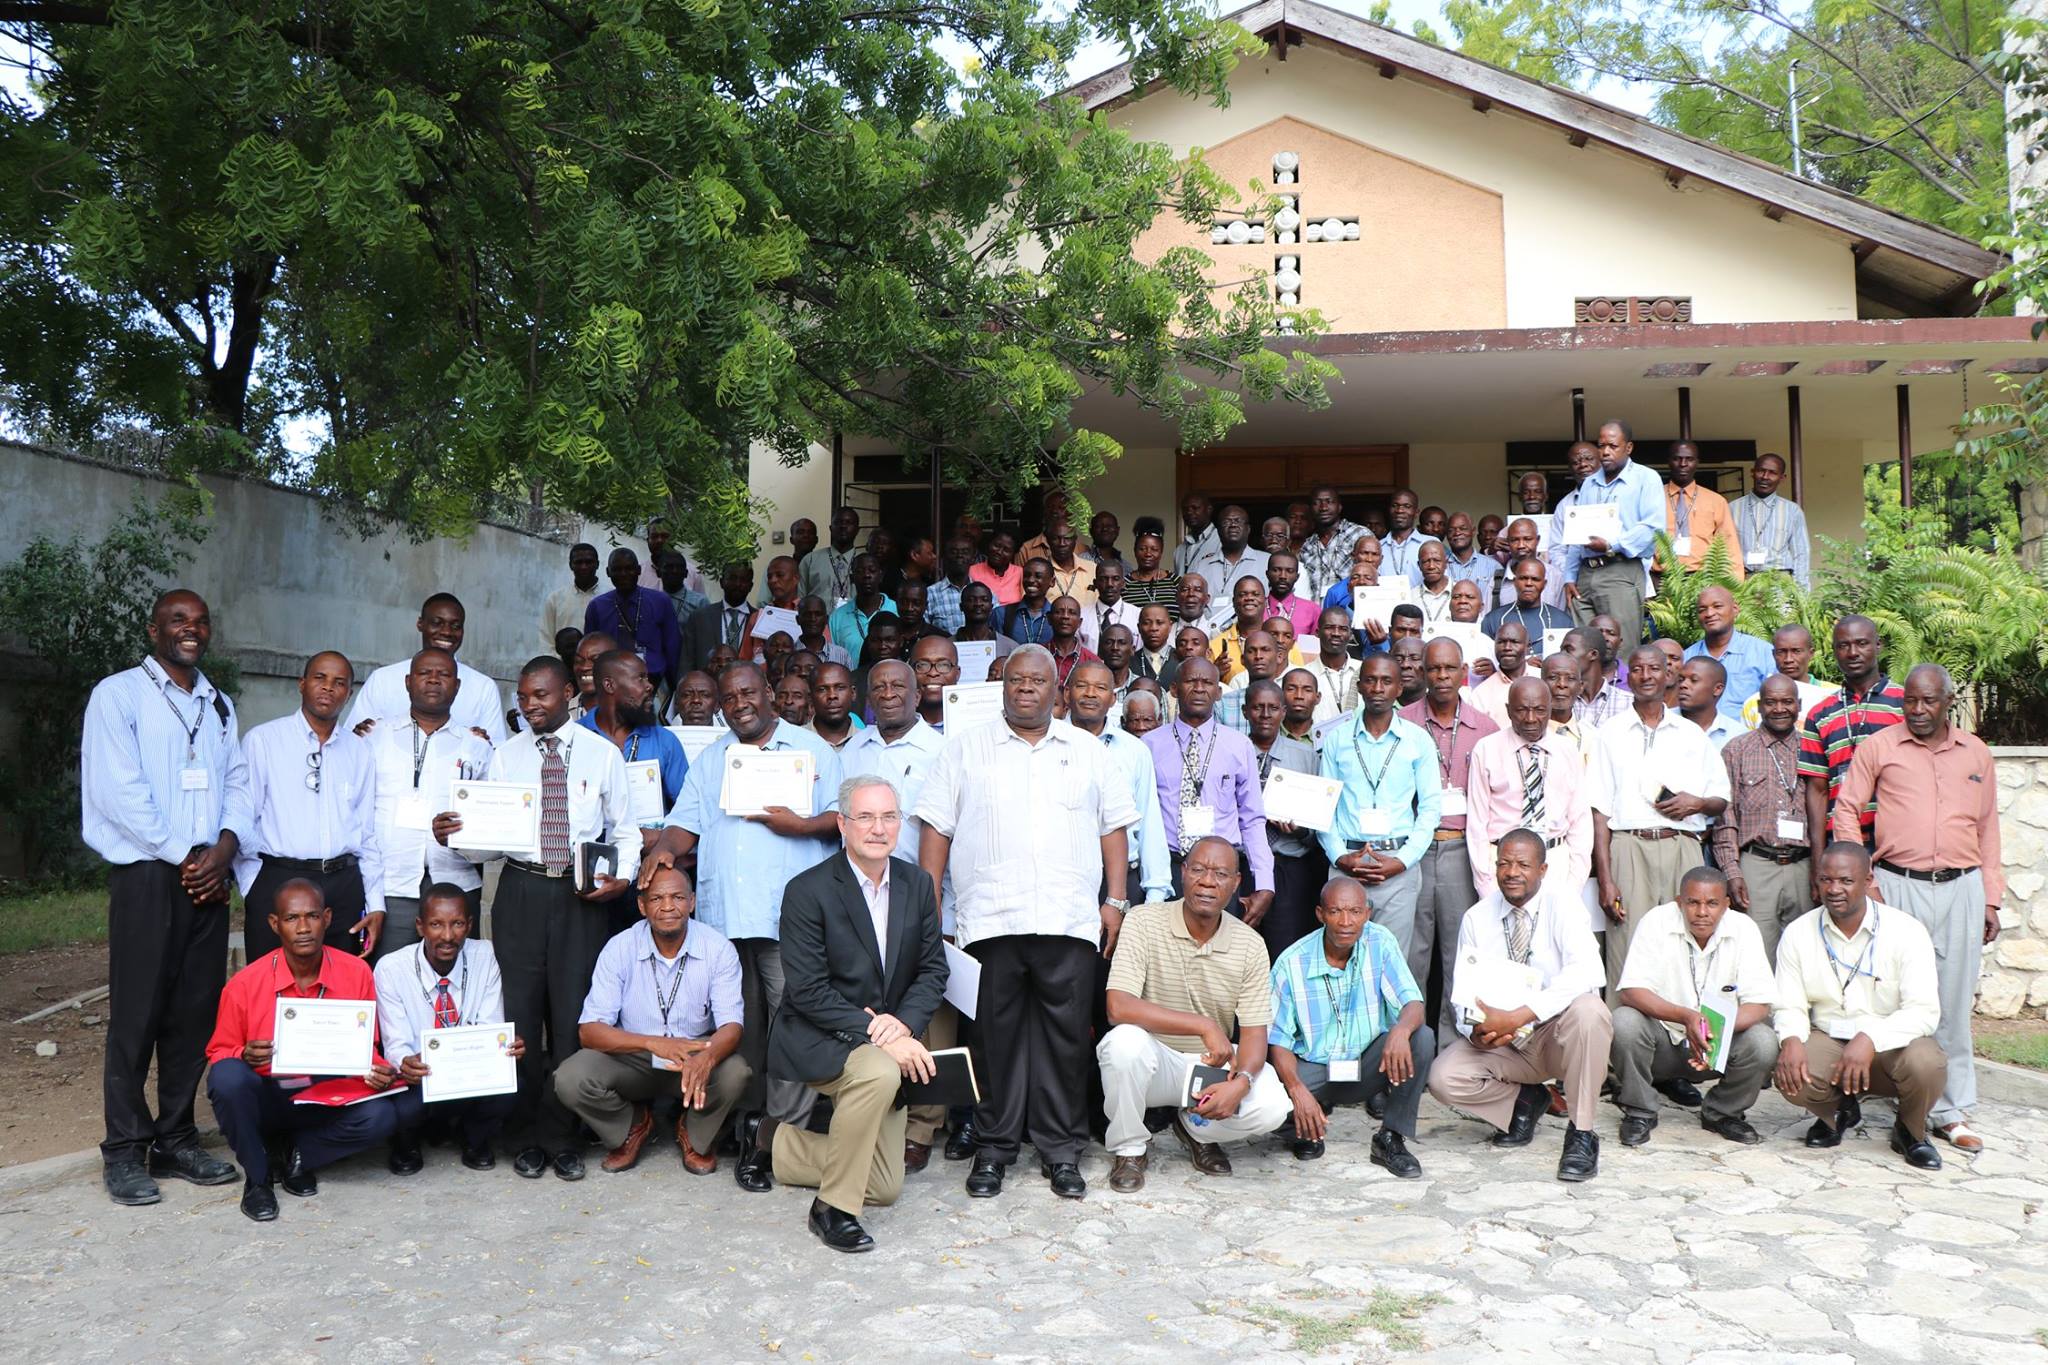 Pastores Haití 2018